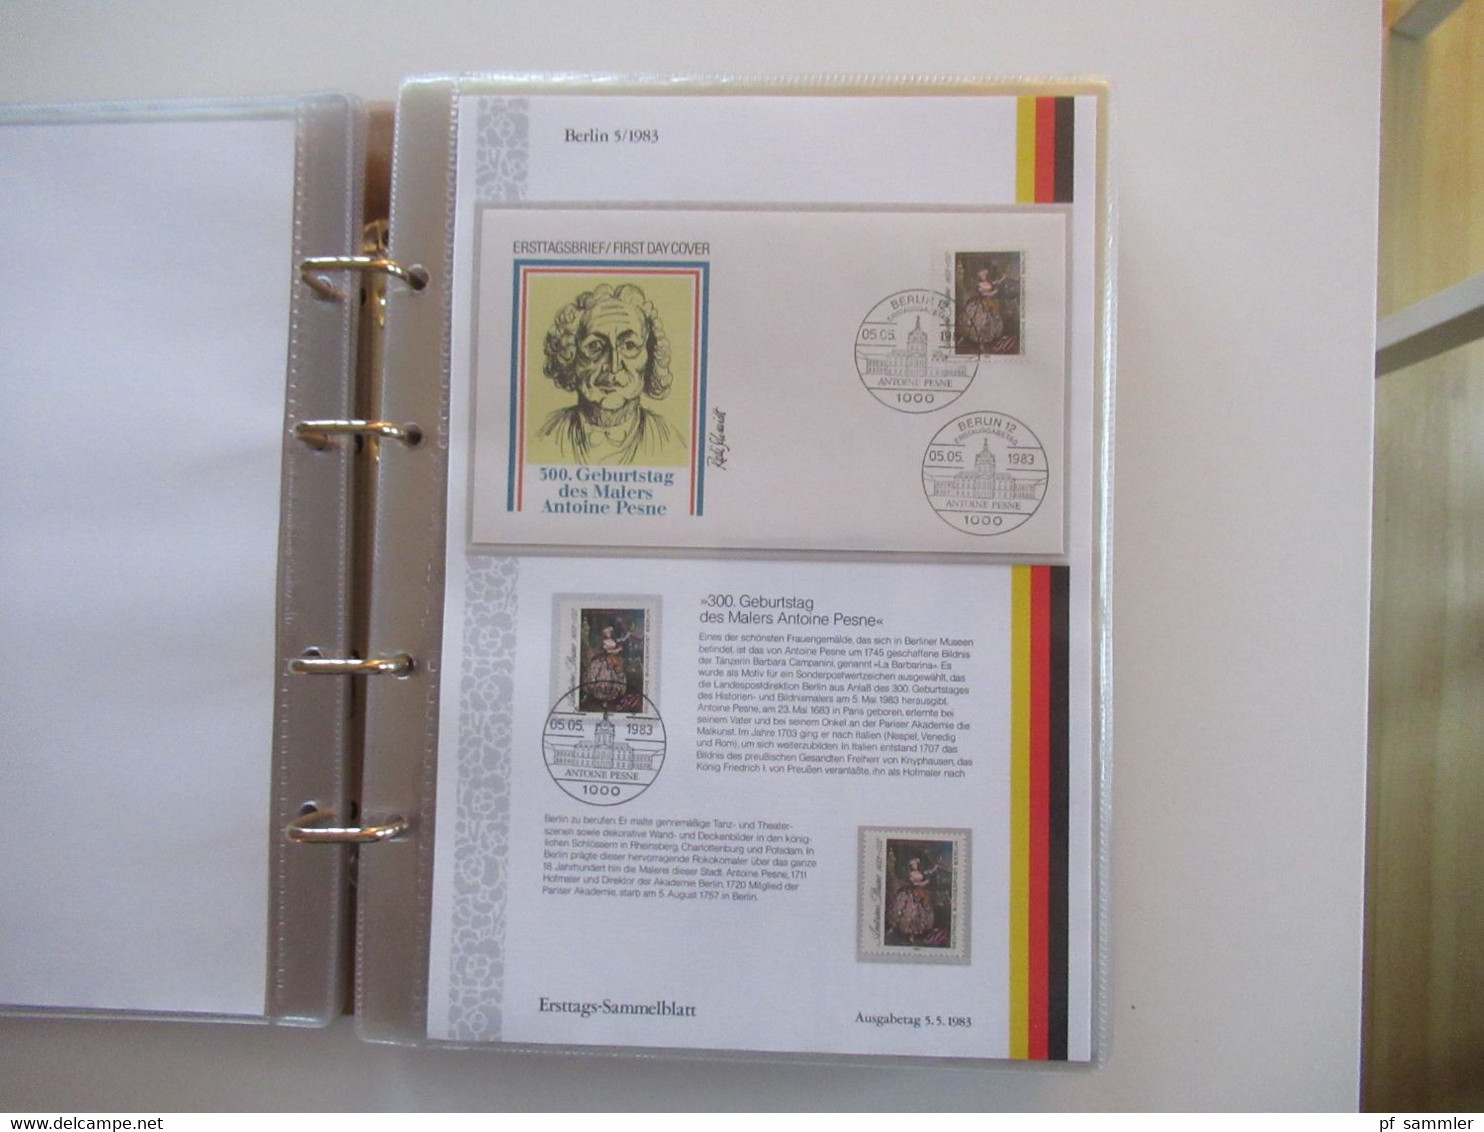 Berlin (West) 1981 - 1984 2 dicke Alben mit Ersttags Sammelblatt / 90 Erstags Sammelblätter sauber gesammelt aus dem Abo